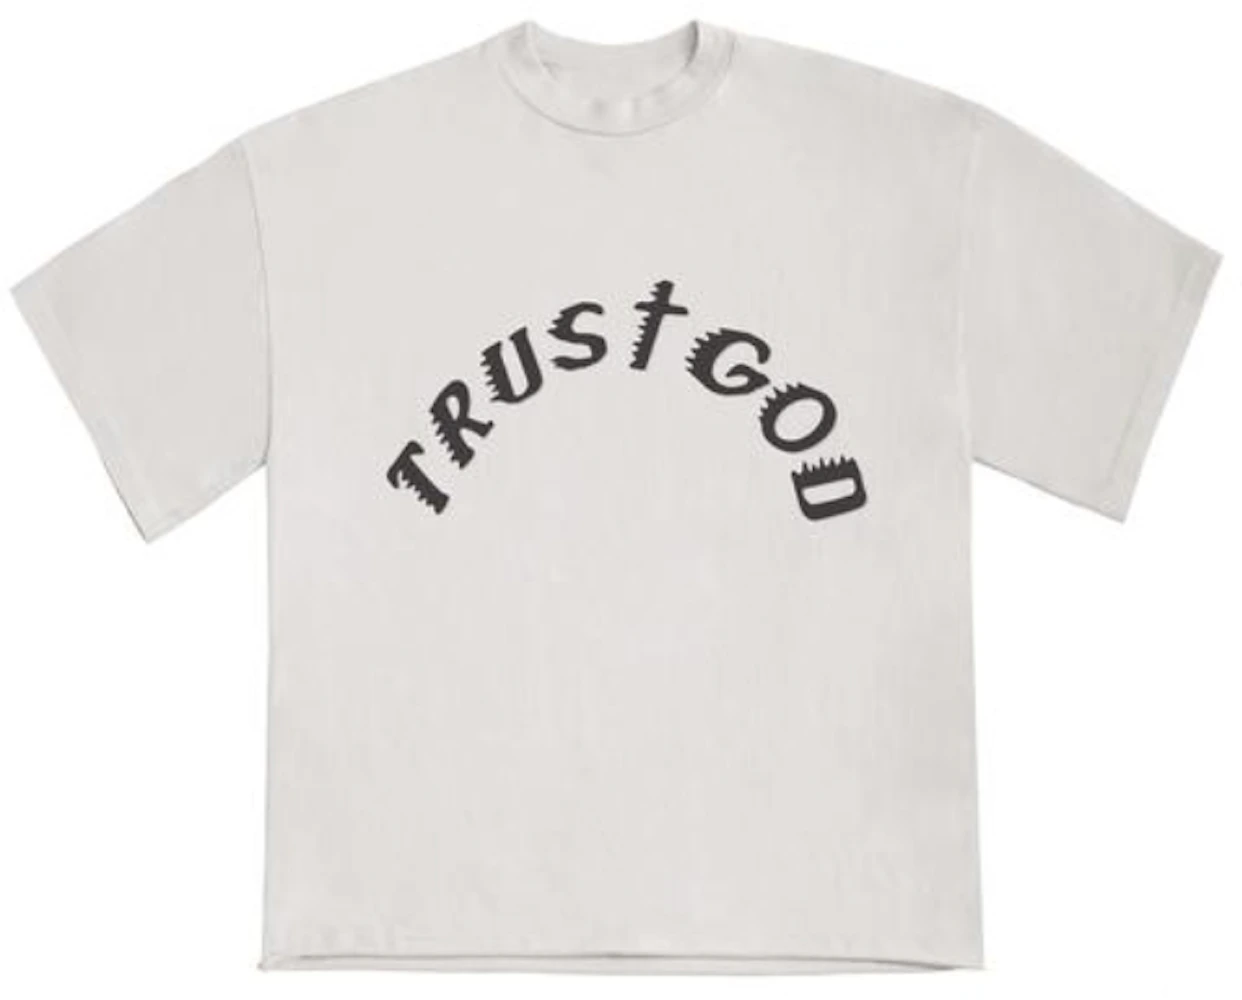 TRUST GOD T-SHIRT